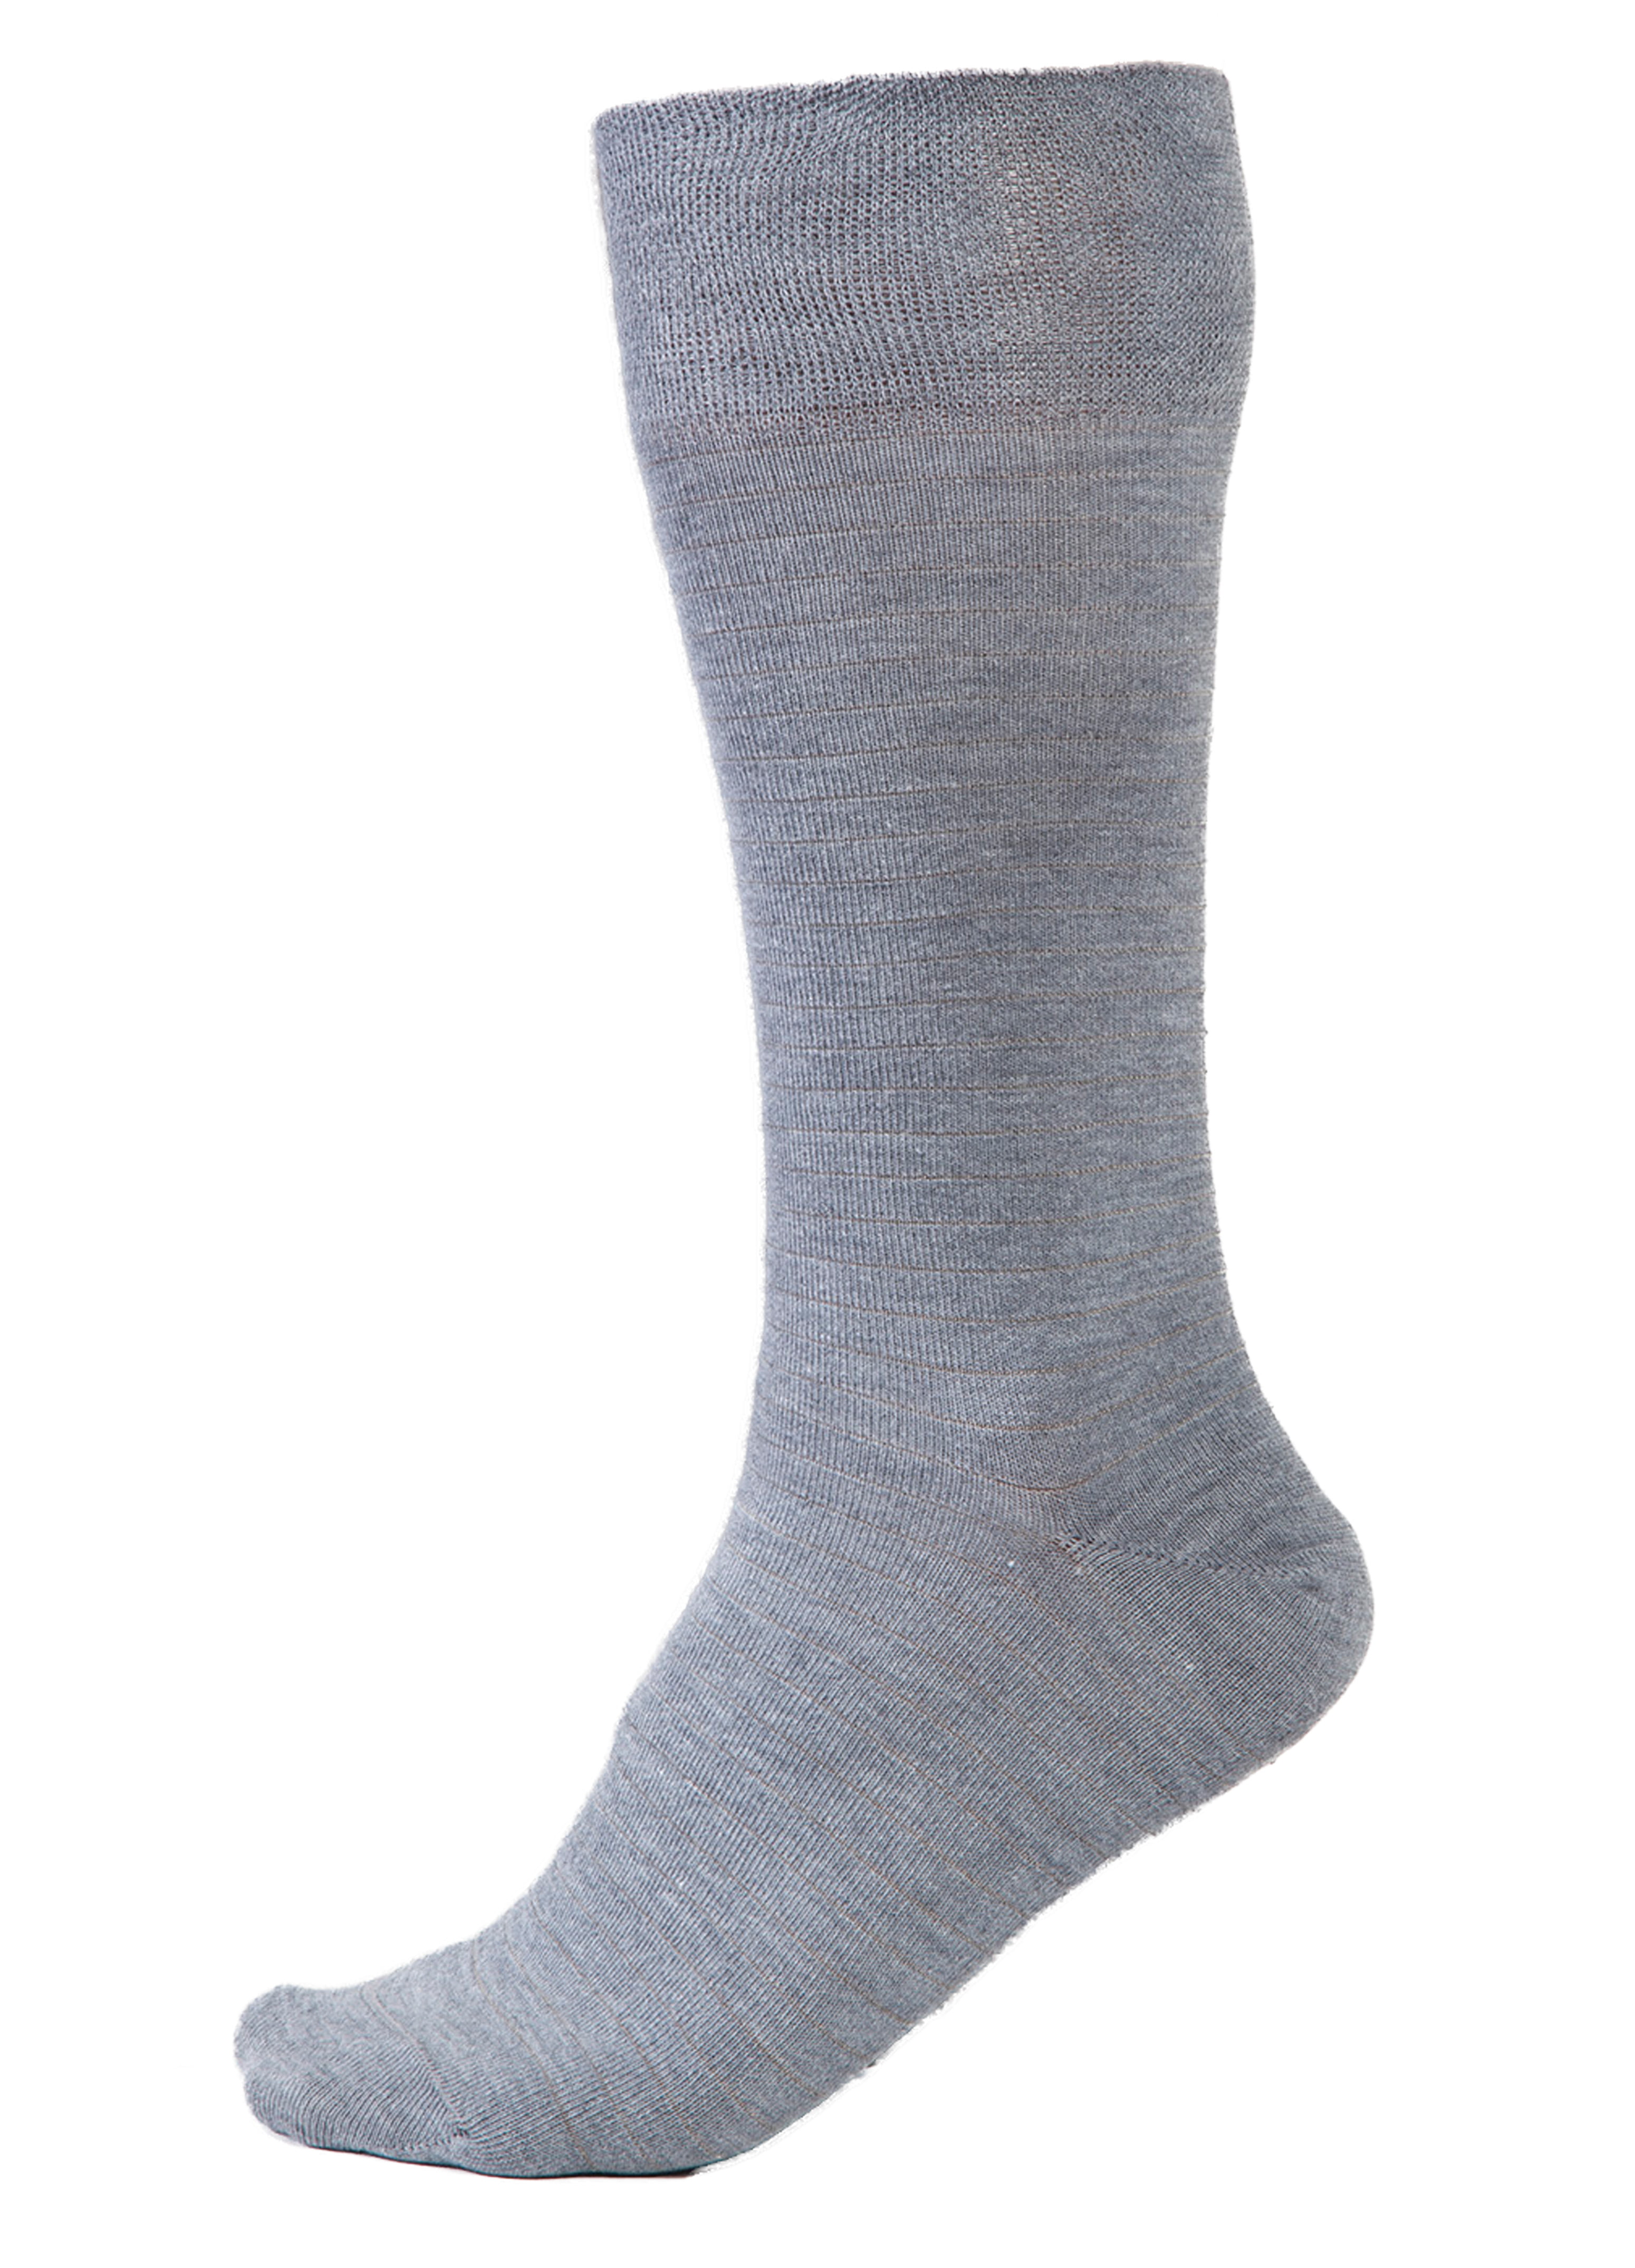 LEE – 812100 Multifunctional Protection Socks